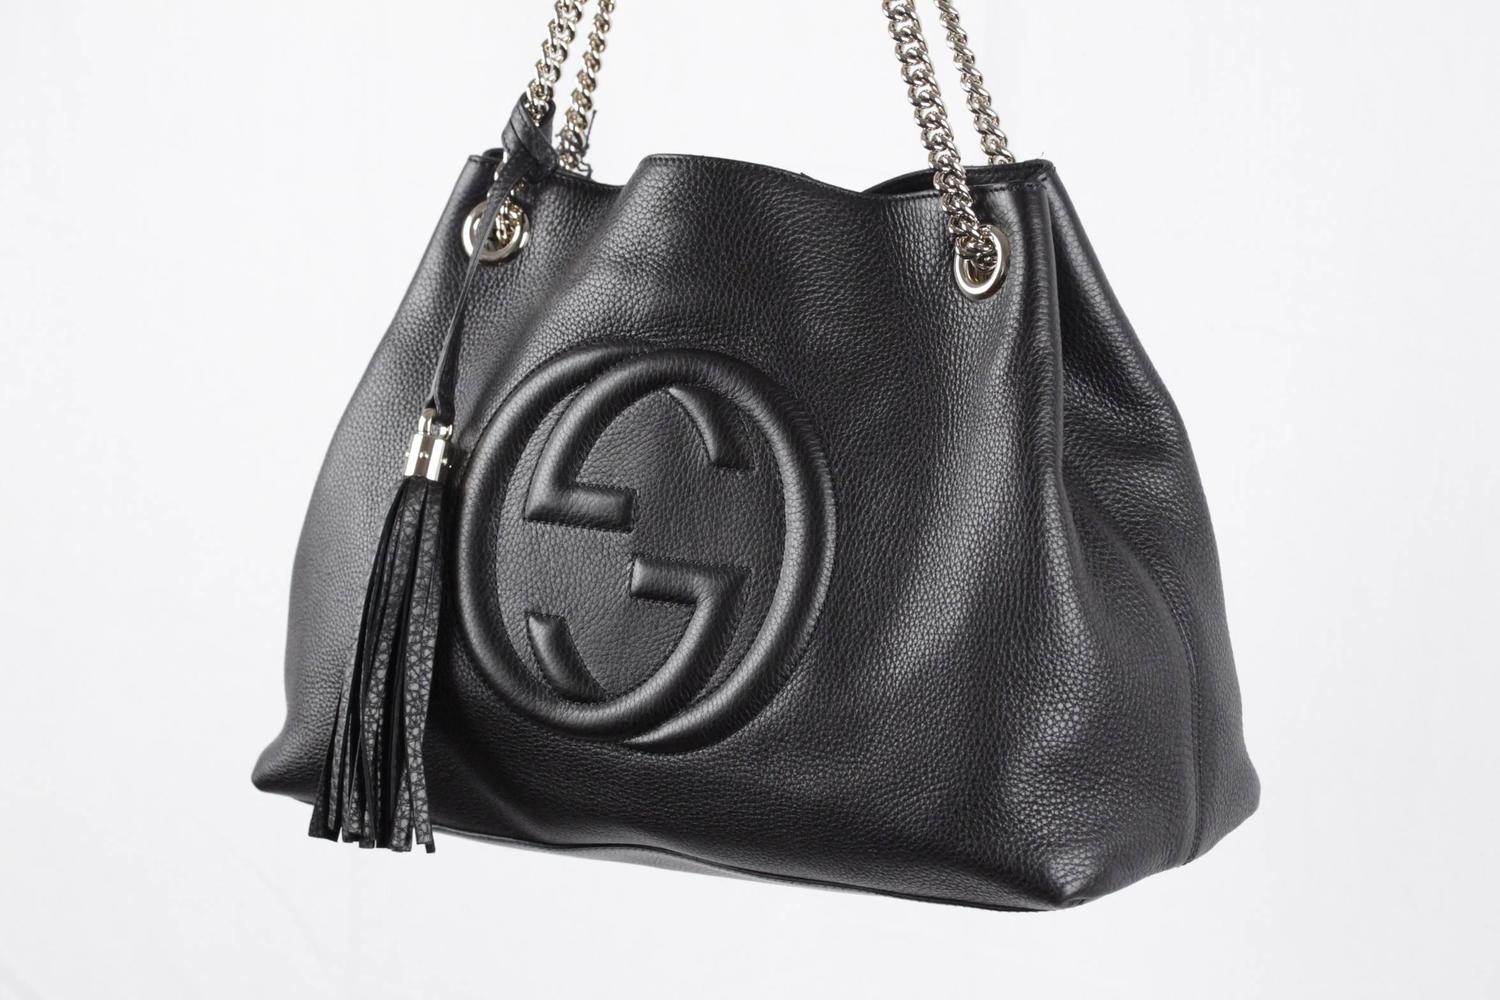 GUCCI Black Leather SOHO TOTE Shopping SHOULDER BAG w/ GG Logo at 1stdibs